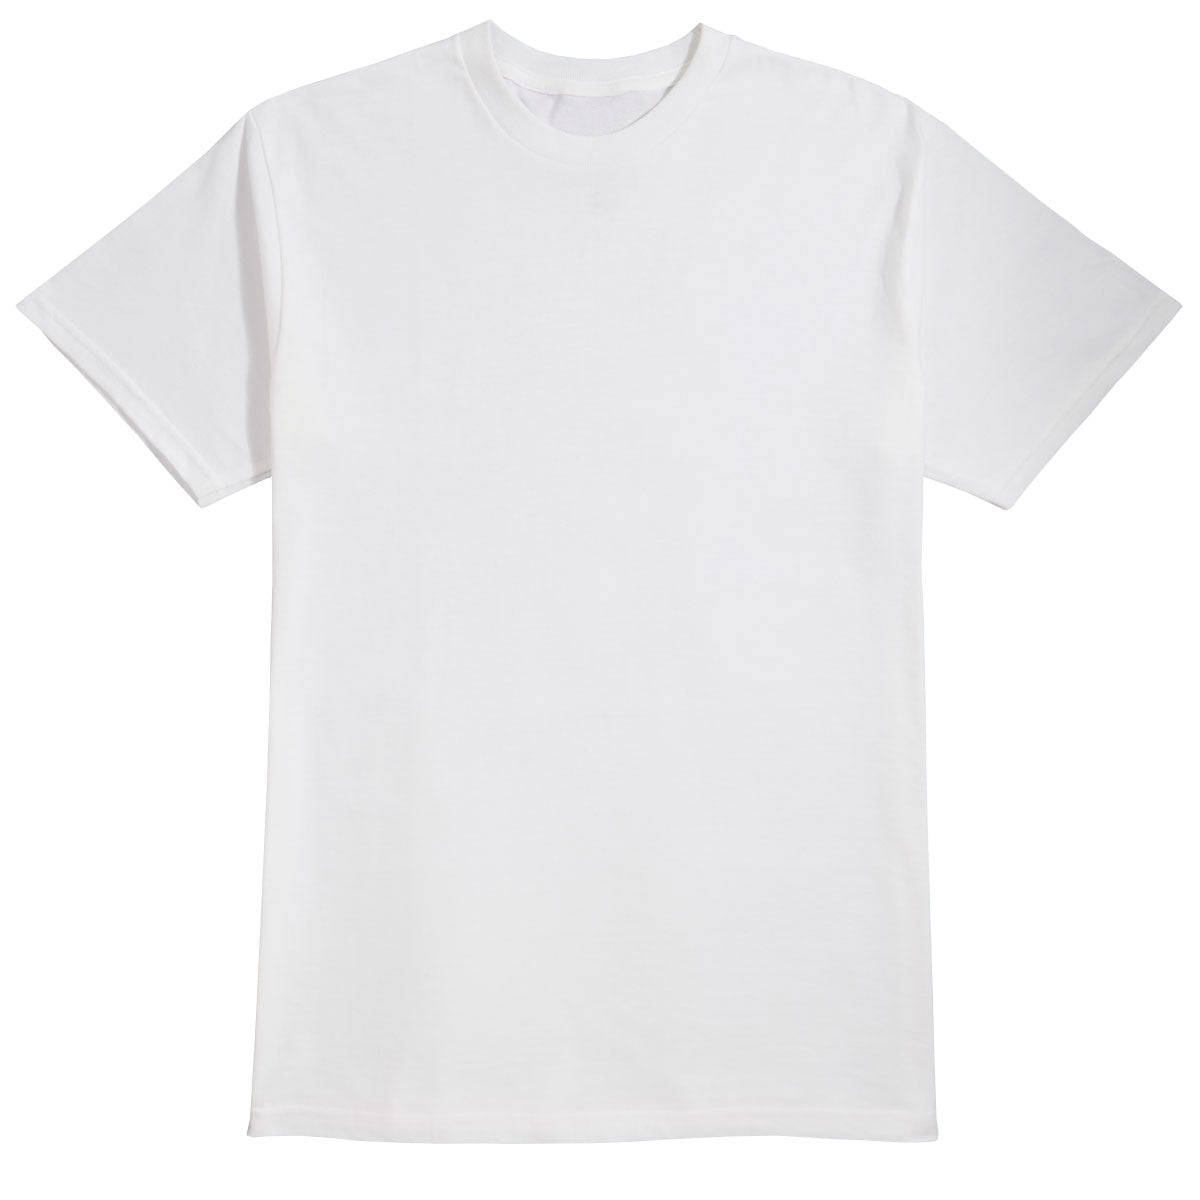 Converse Flash Sheet T-Shirt - White - XL image 1